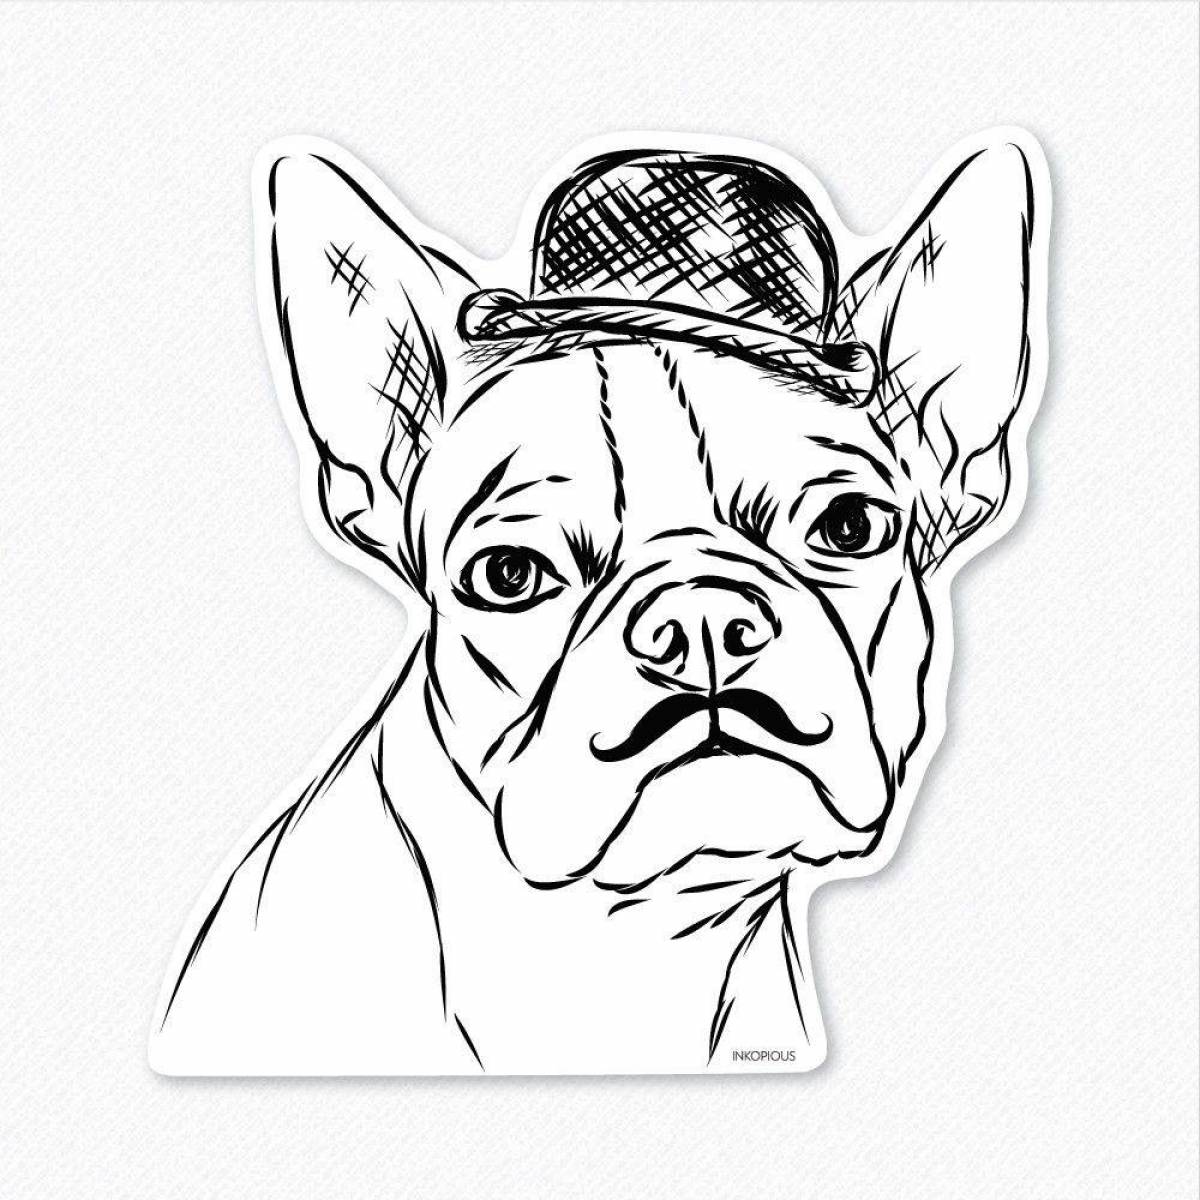 Naughty french bulldog coloring page